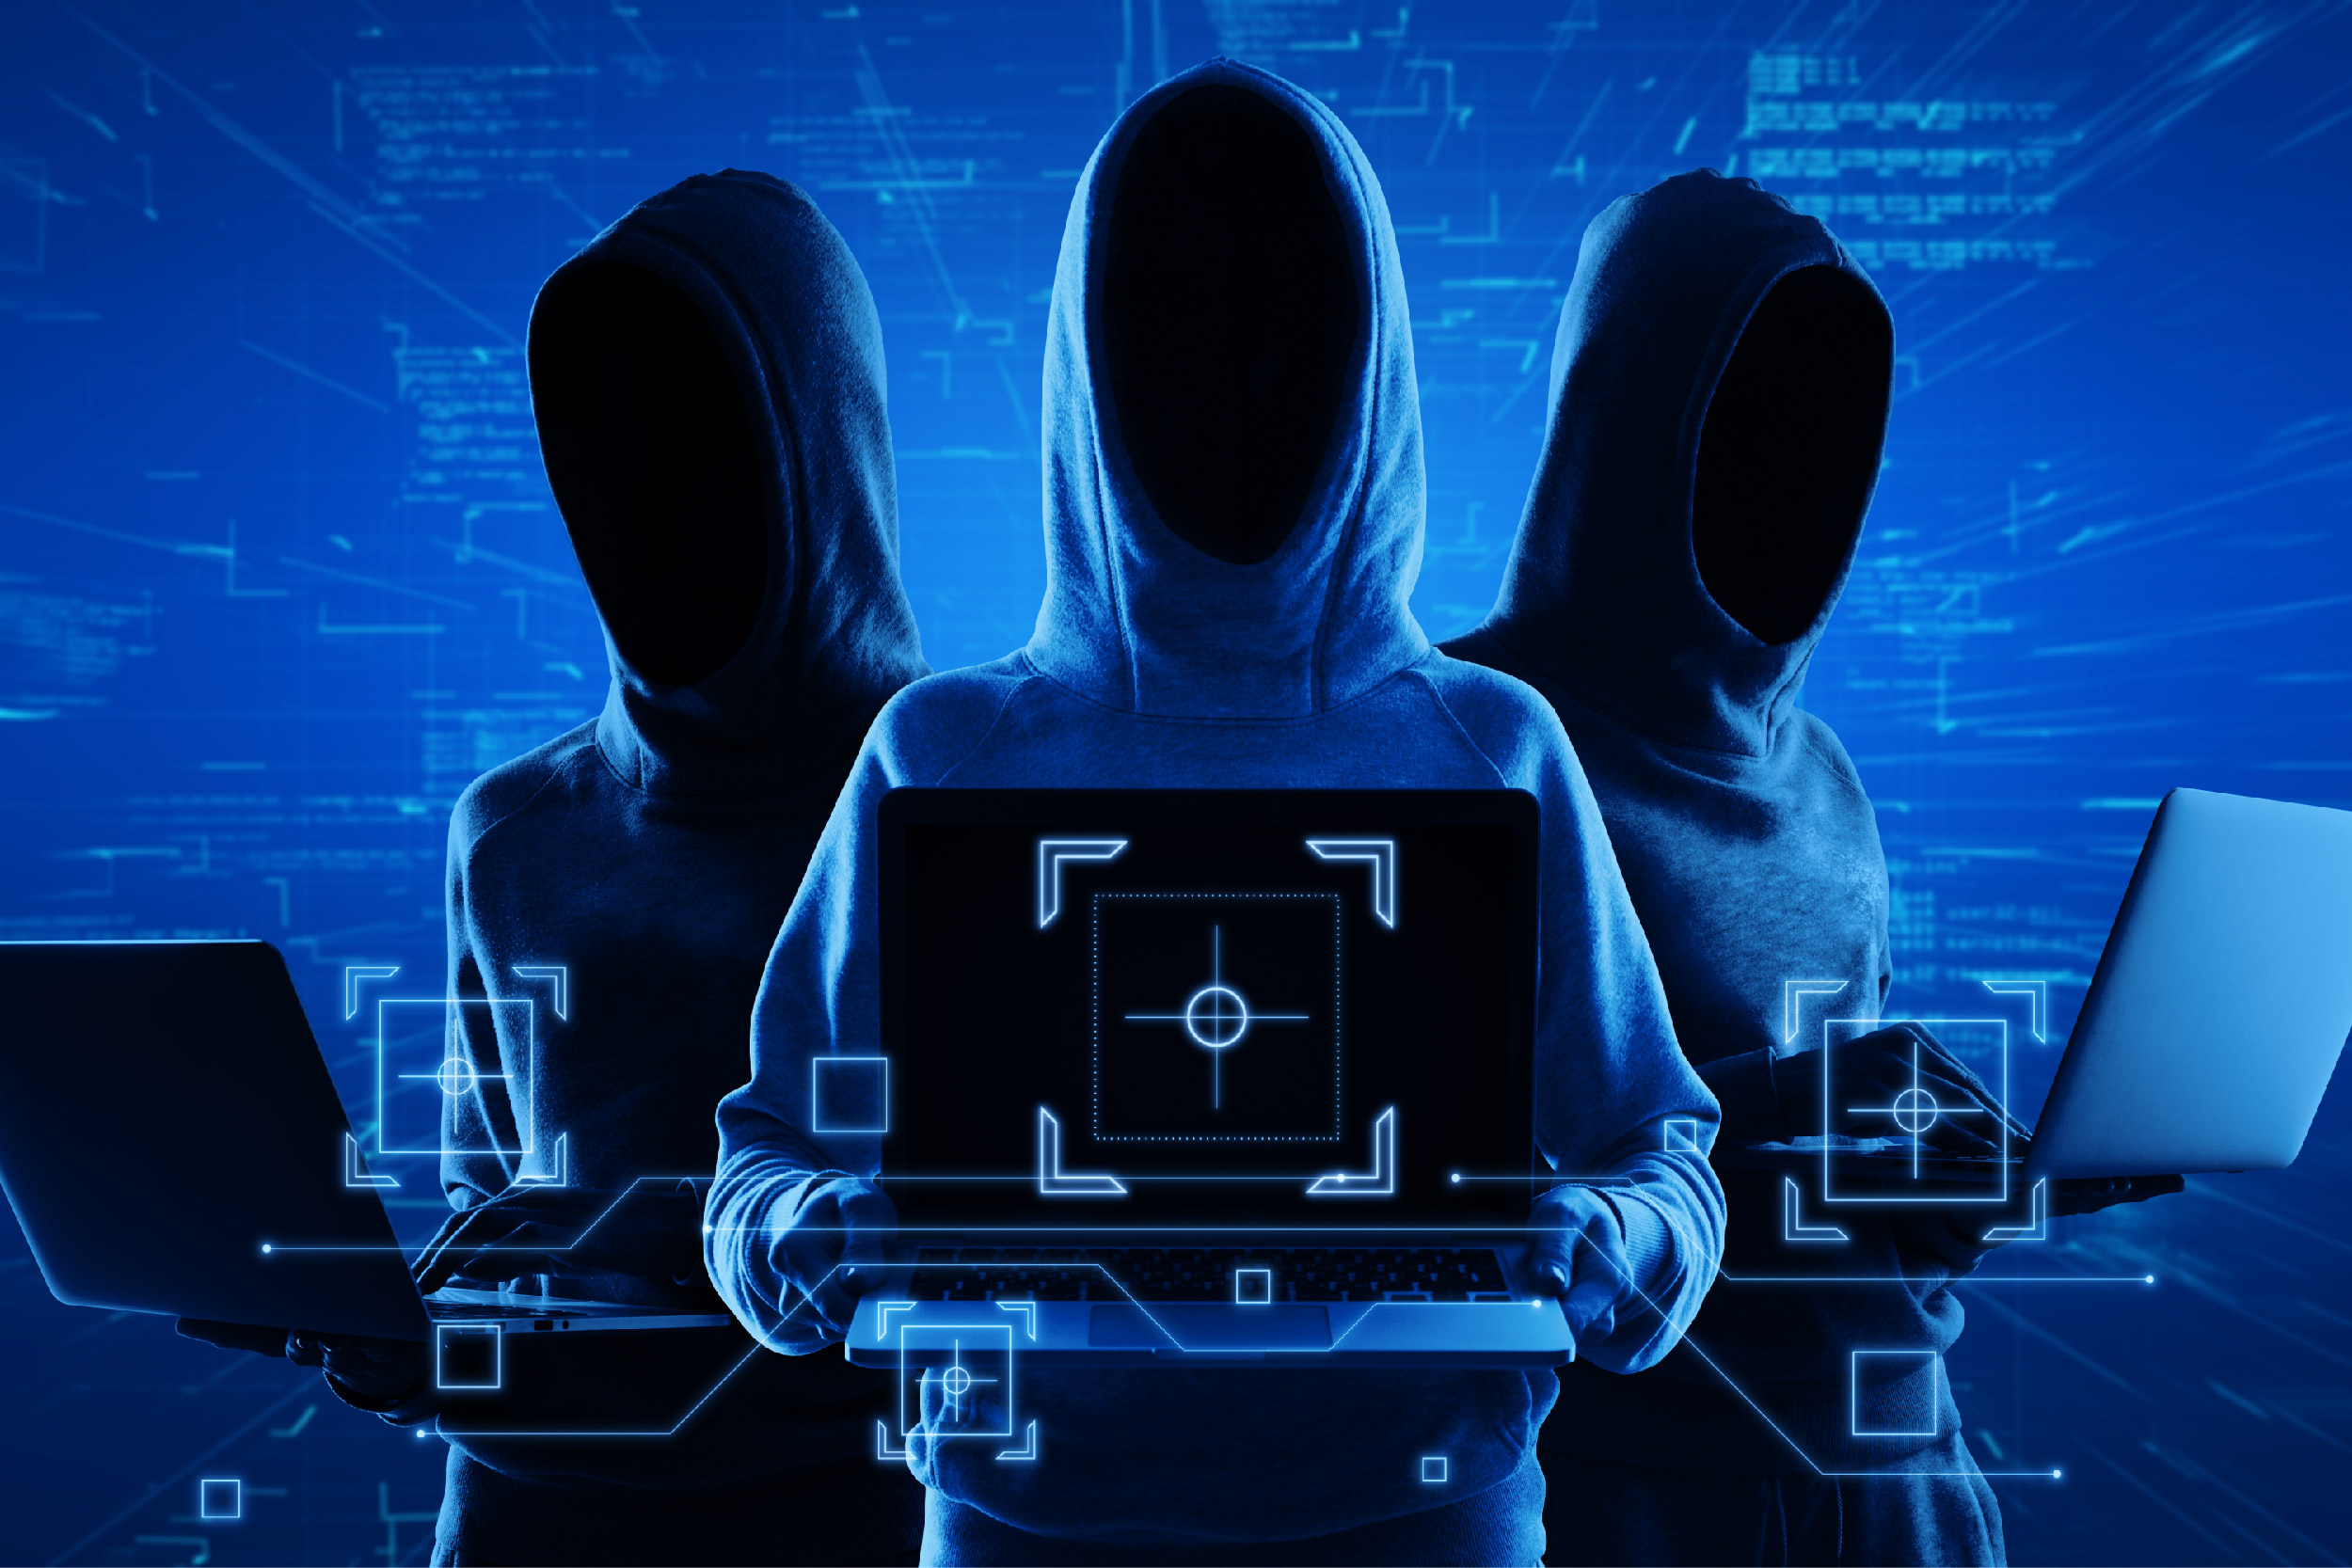 Fake DirectX12 Download Website Installs Crypto-Stealing Malware